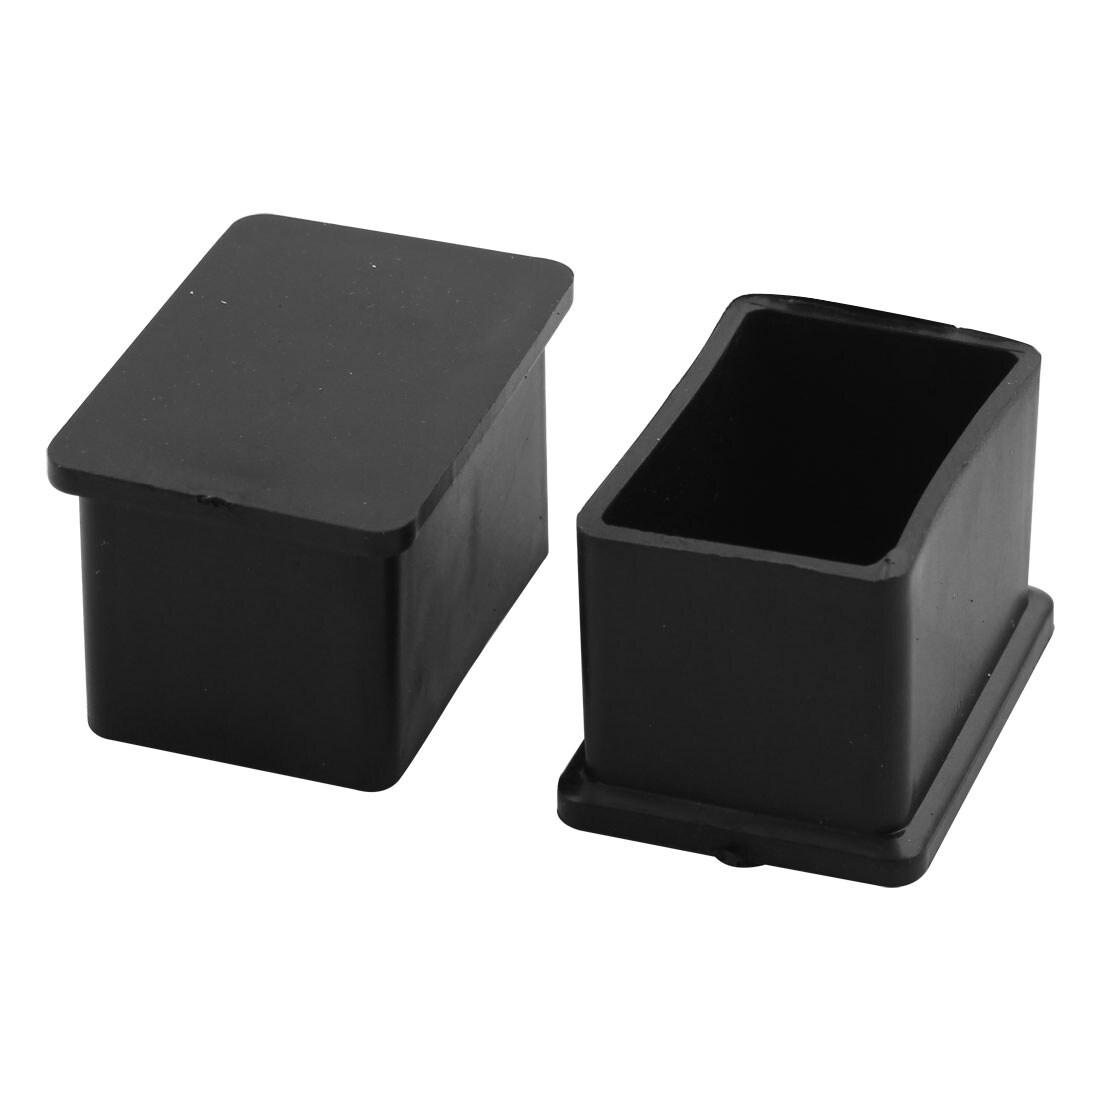 Furniture Table Rubber Anti Slip Leg Cap Foot Cover 38x25mm 12Pcs - Black - 1.8'' x 1.3'' x 1.1'' (L*W*H)